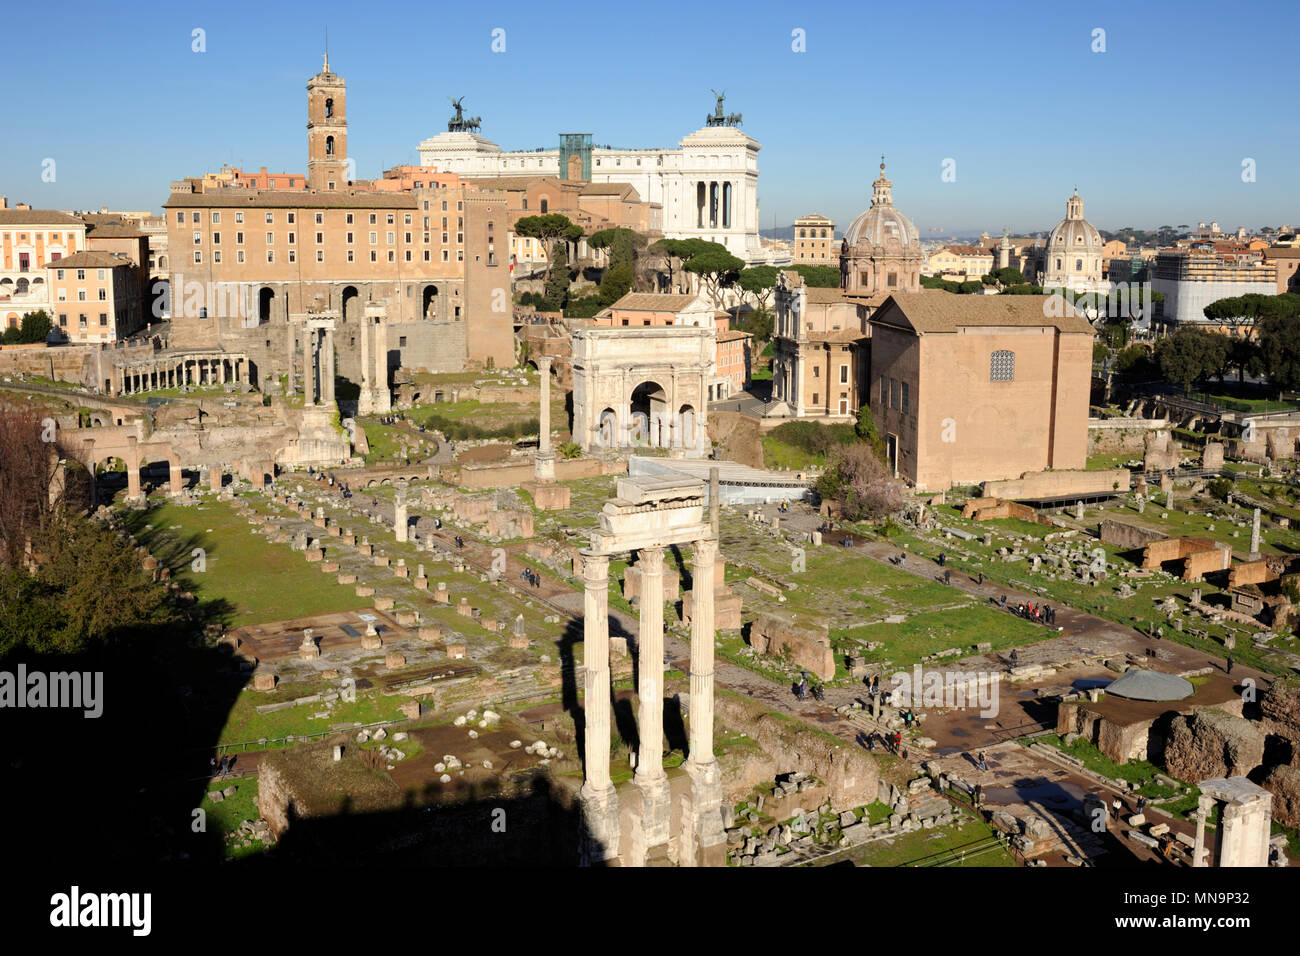 Forum romain, Rome, Italie Banque D'Images